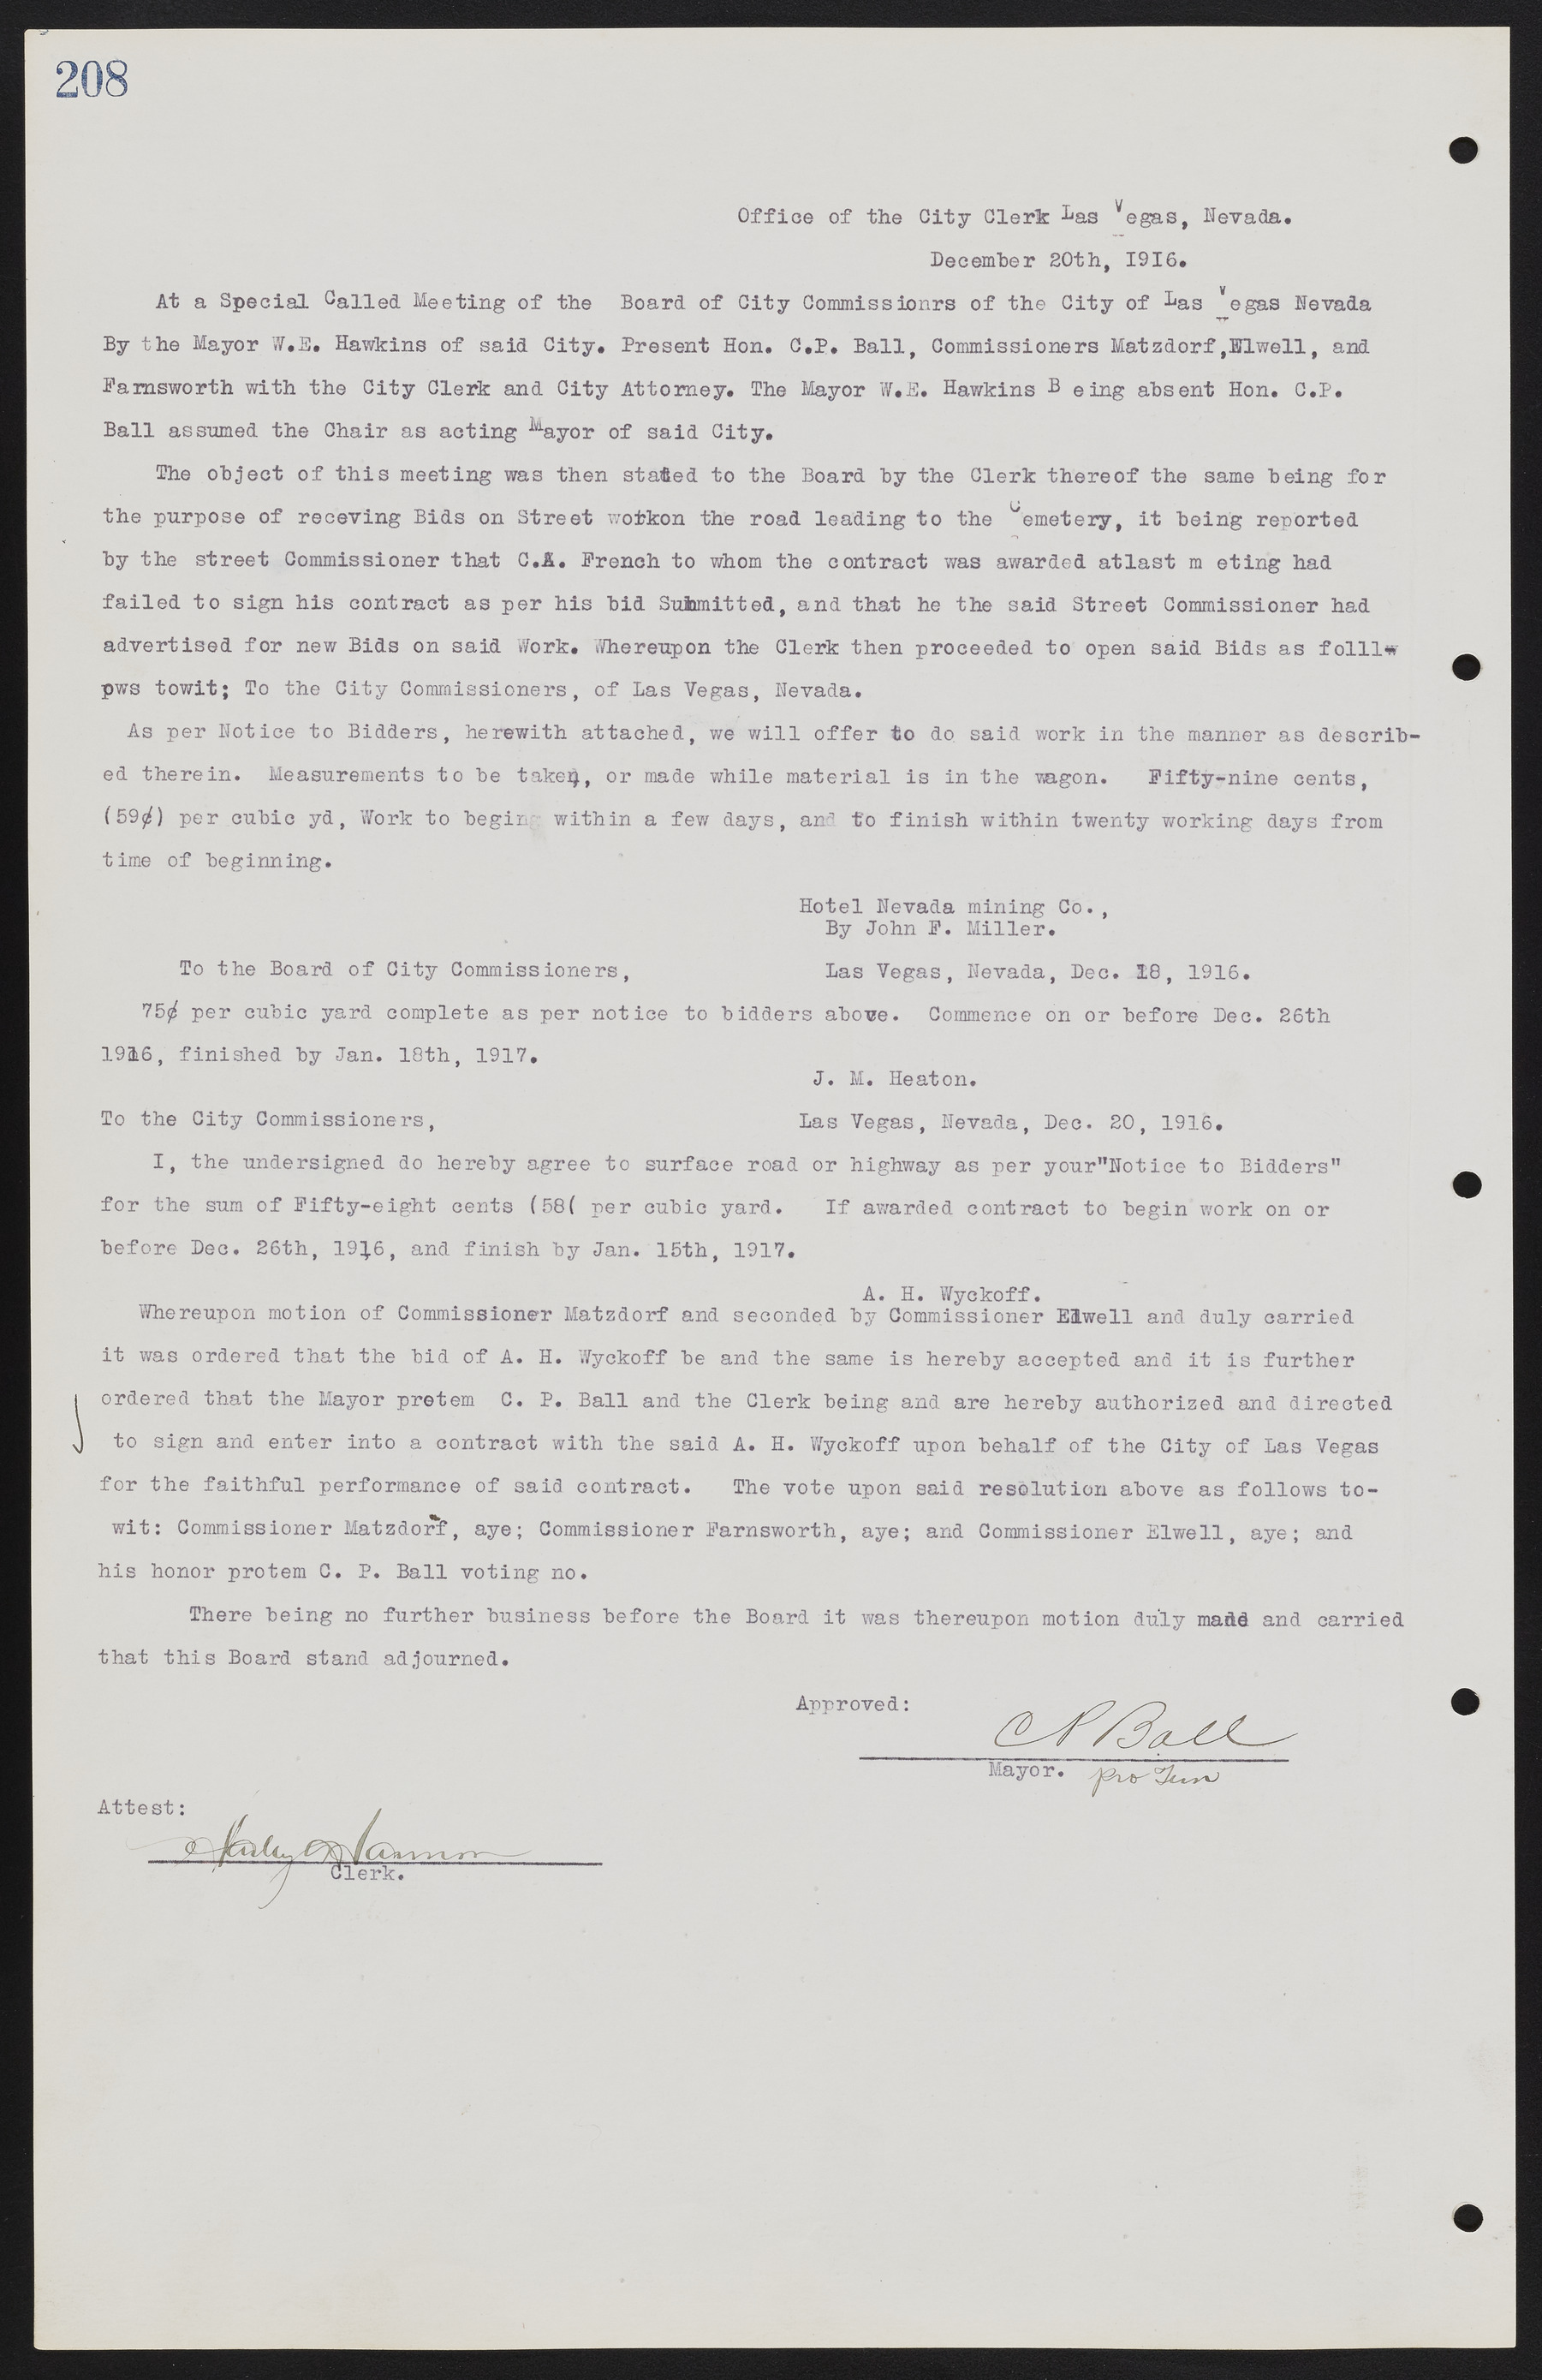 Las Vegas City Commission Minutes, June 22, 1911 to February 7, 1922, lvc000001-224